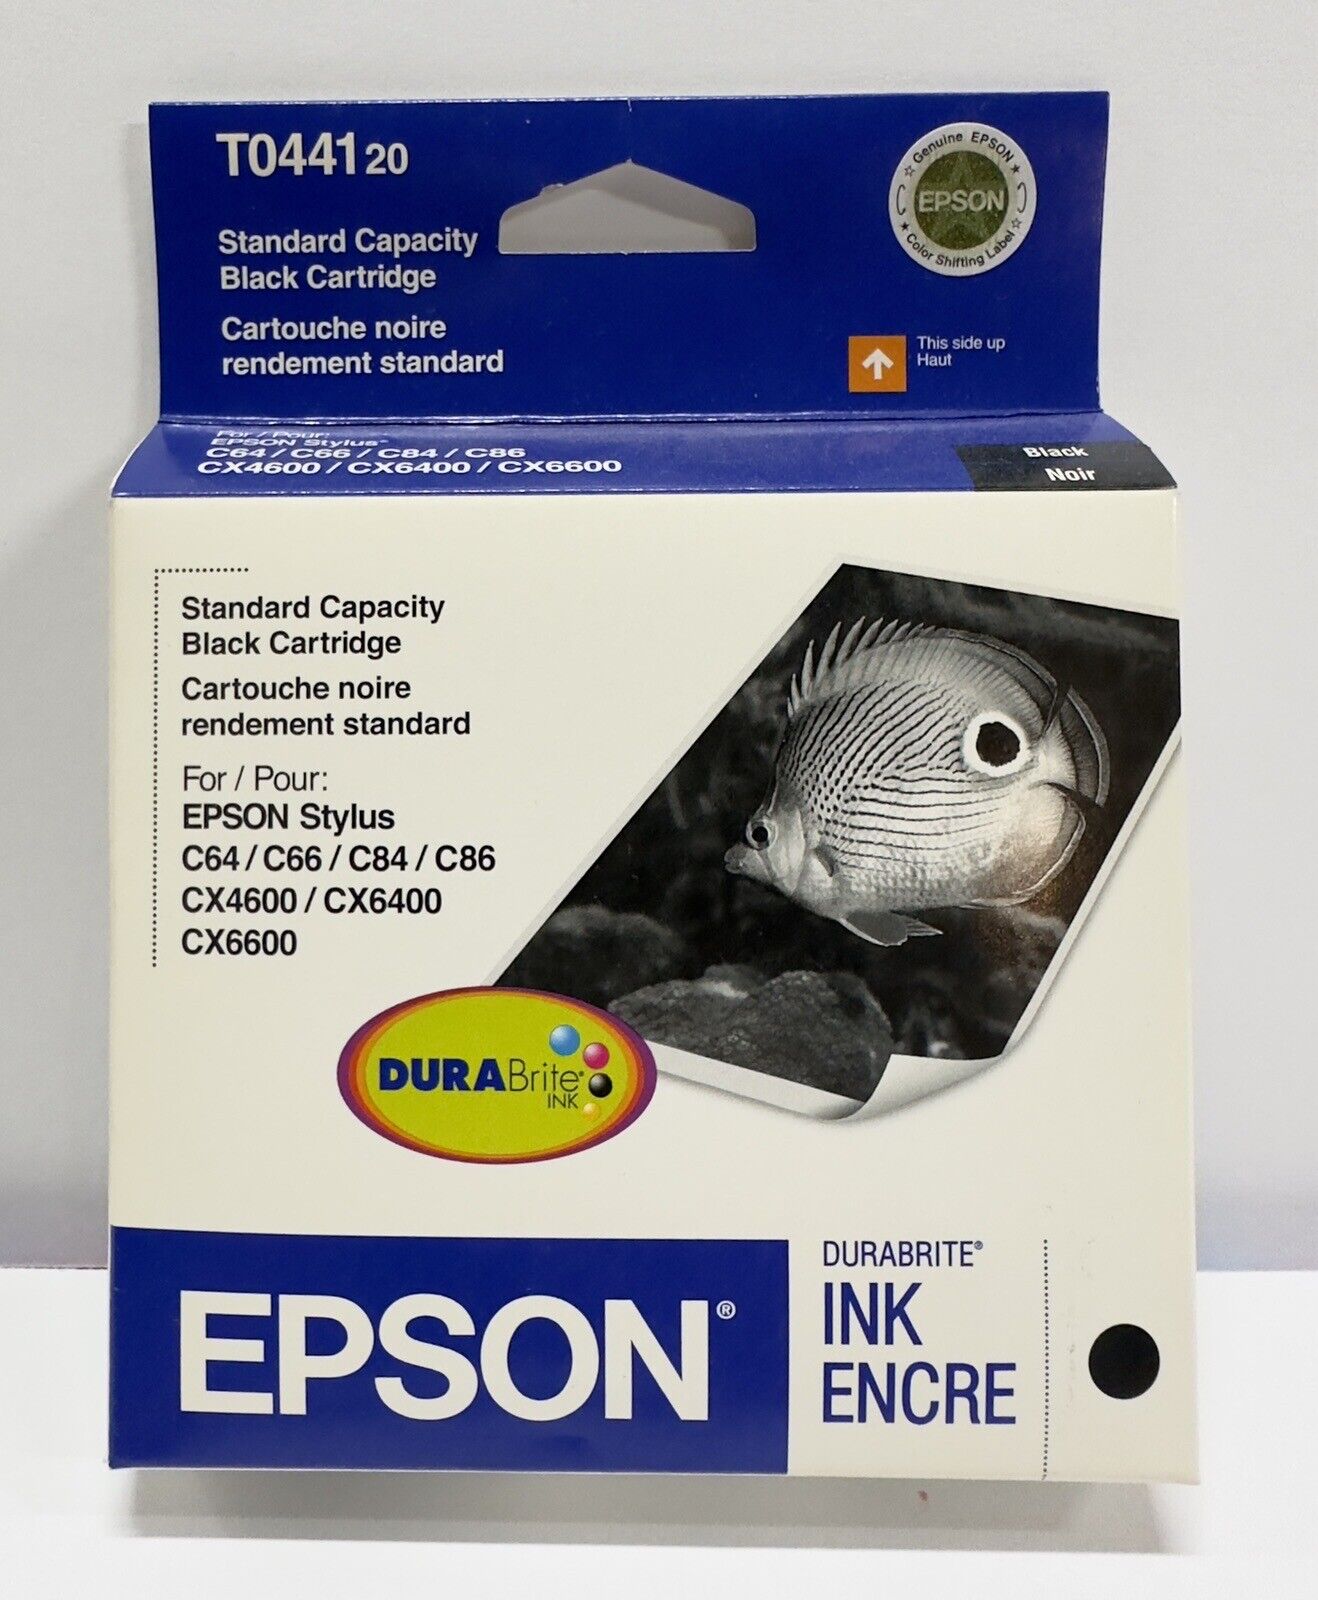 Epson Stylus Genuine Sealed T0441 20 Black Ink Cartridge C64 C84 EXP 3/07 - A7